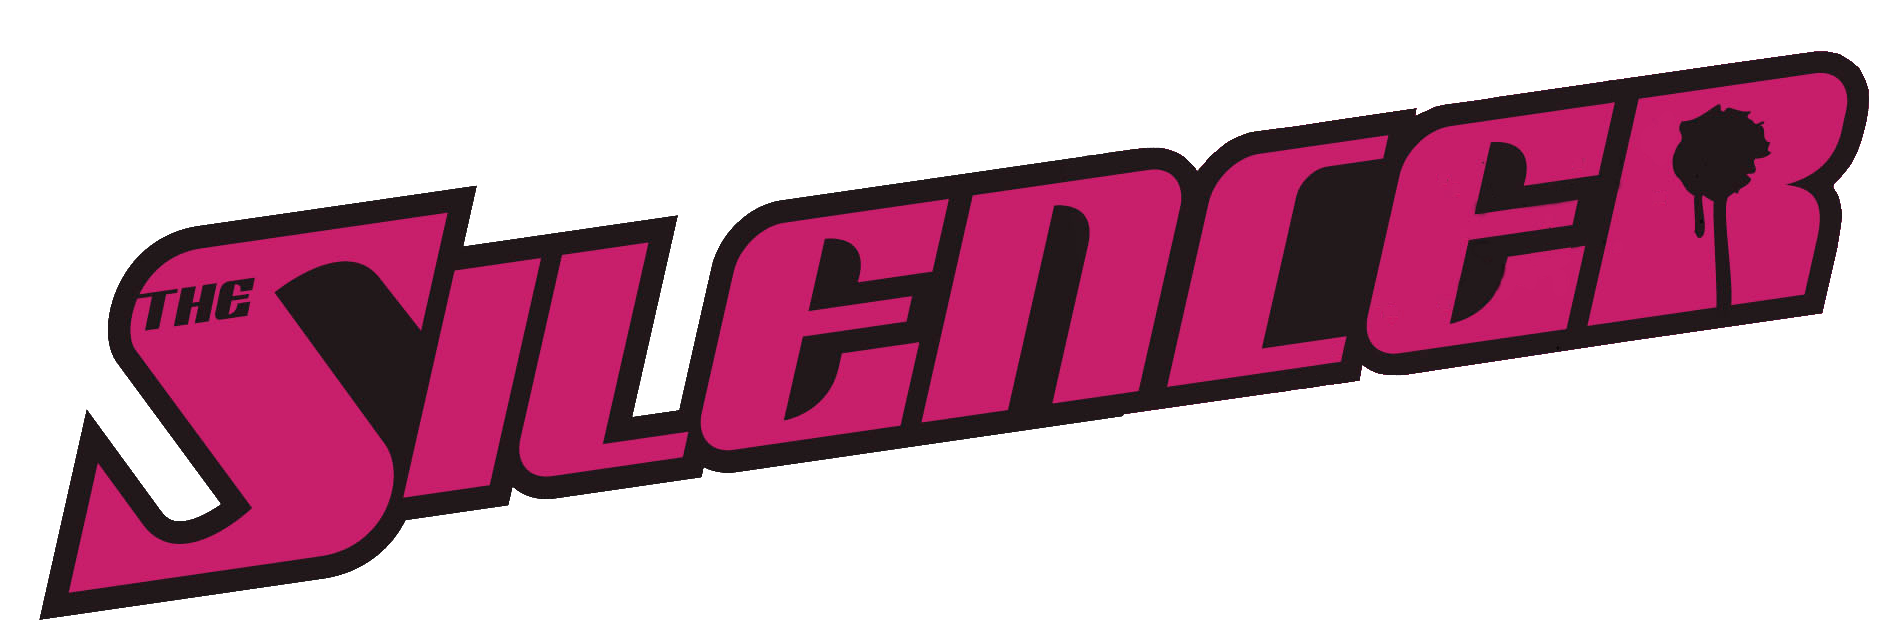 Silencer Logo - Silencer | LOGO Comics Wiki | FANDOM powered by Wikia